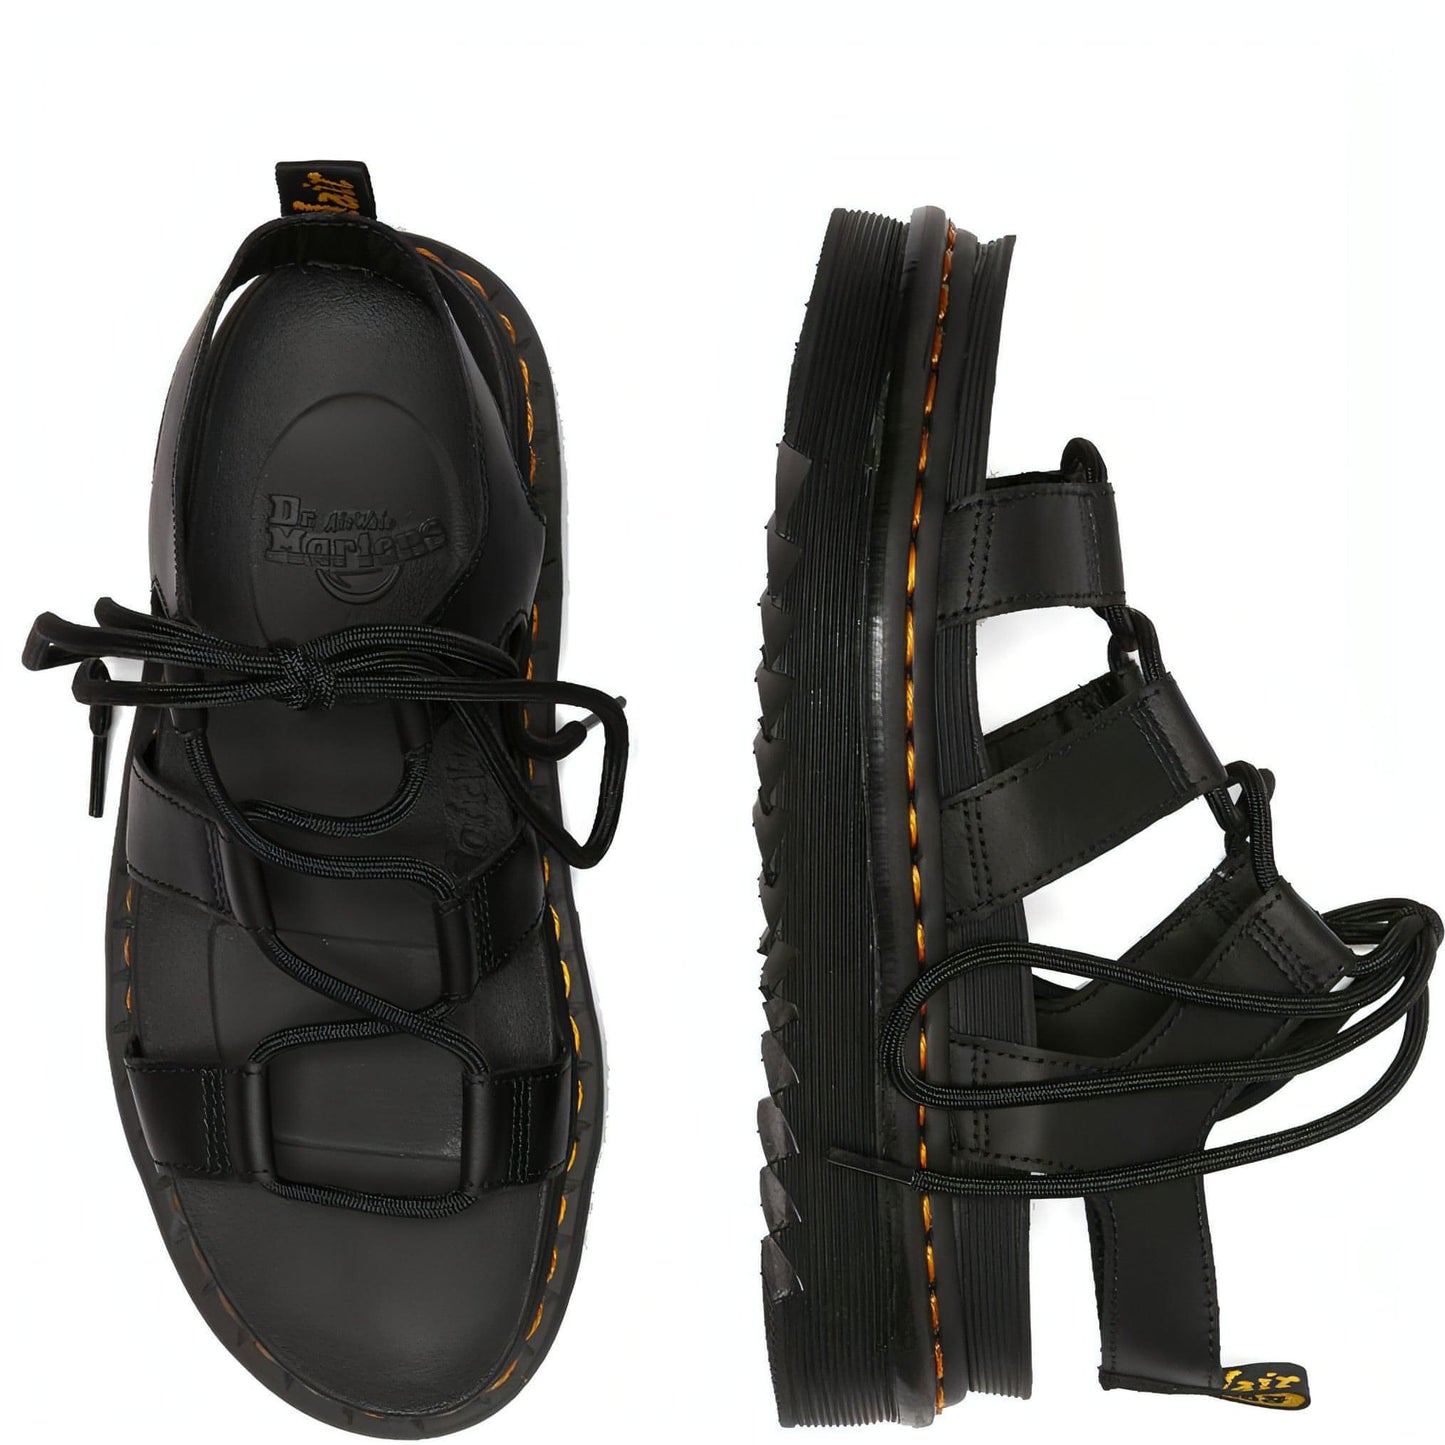 DR. MARTENS moteriškos juodos basutės Nartilla hydro sandals